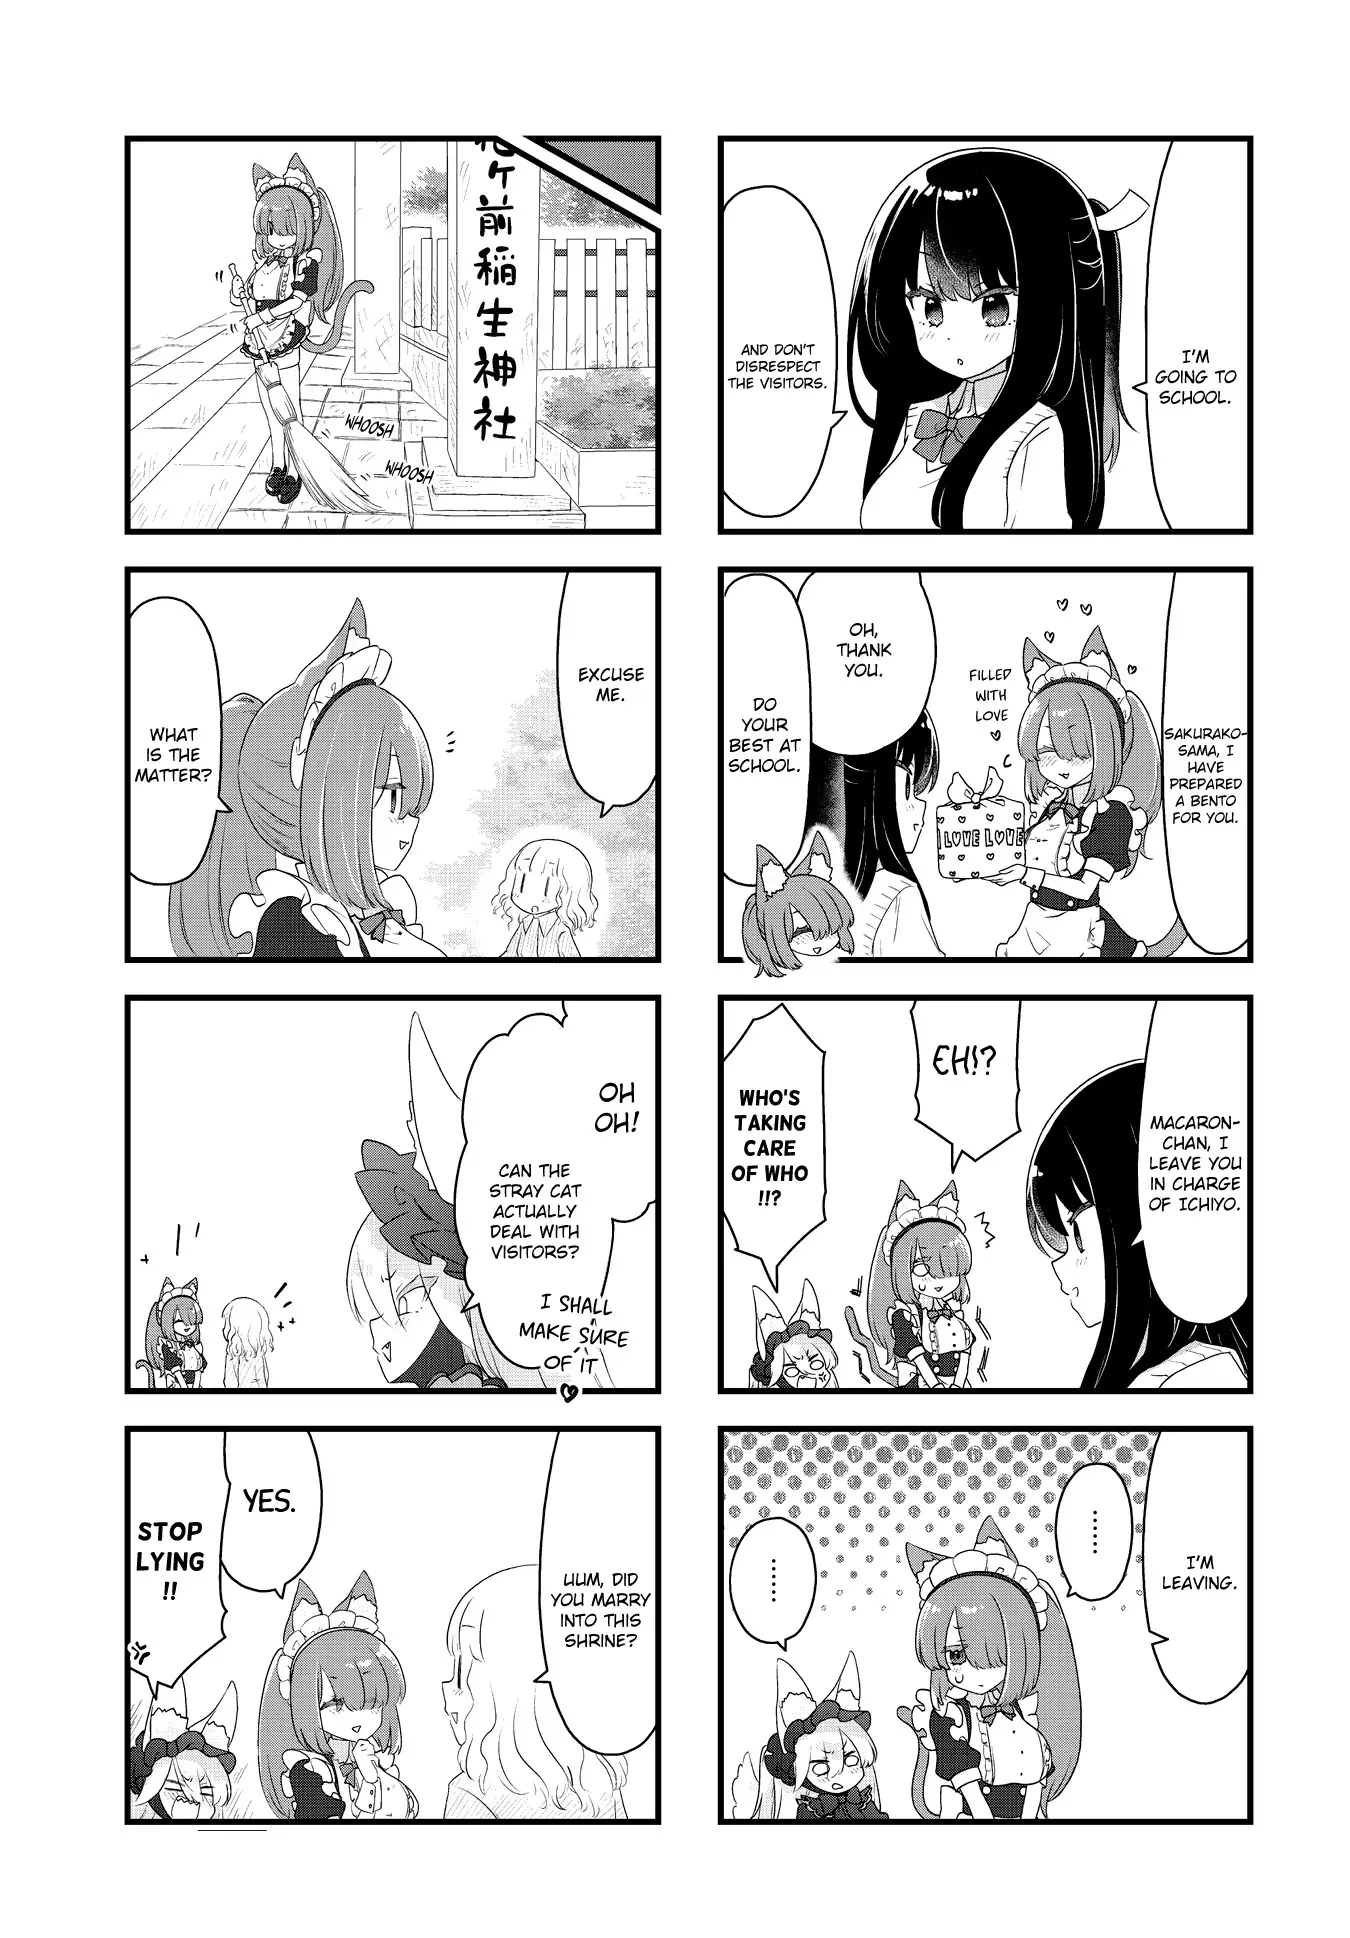 Wakarasero! Namaikitsune-Sama - 7 page 5-8ae0578a